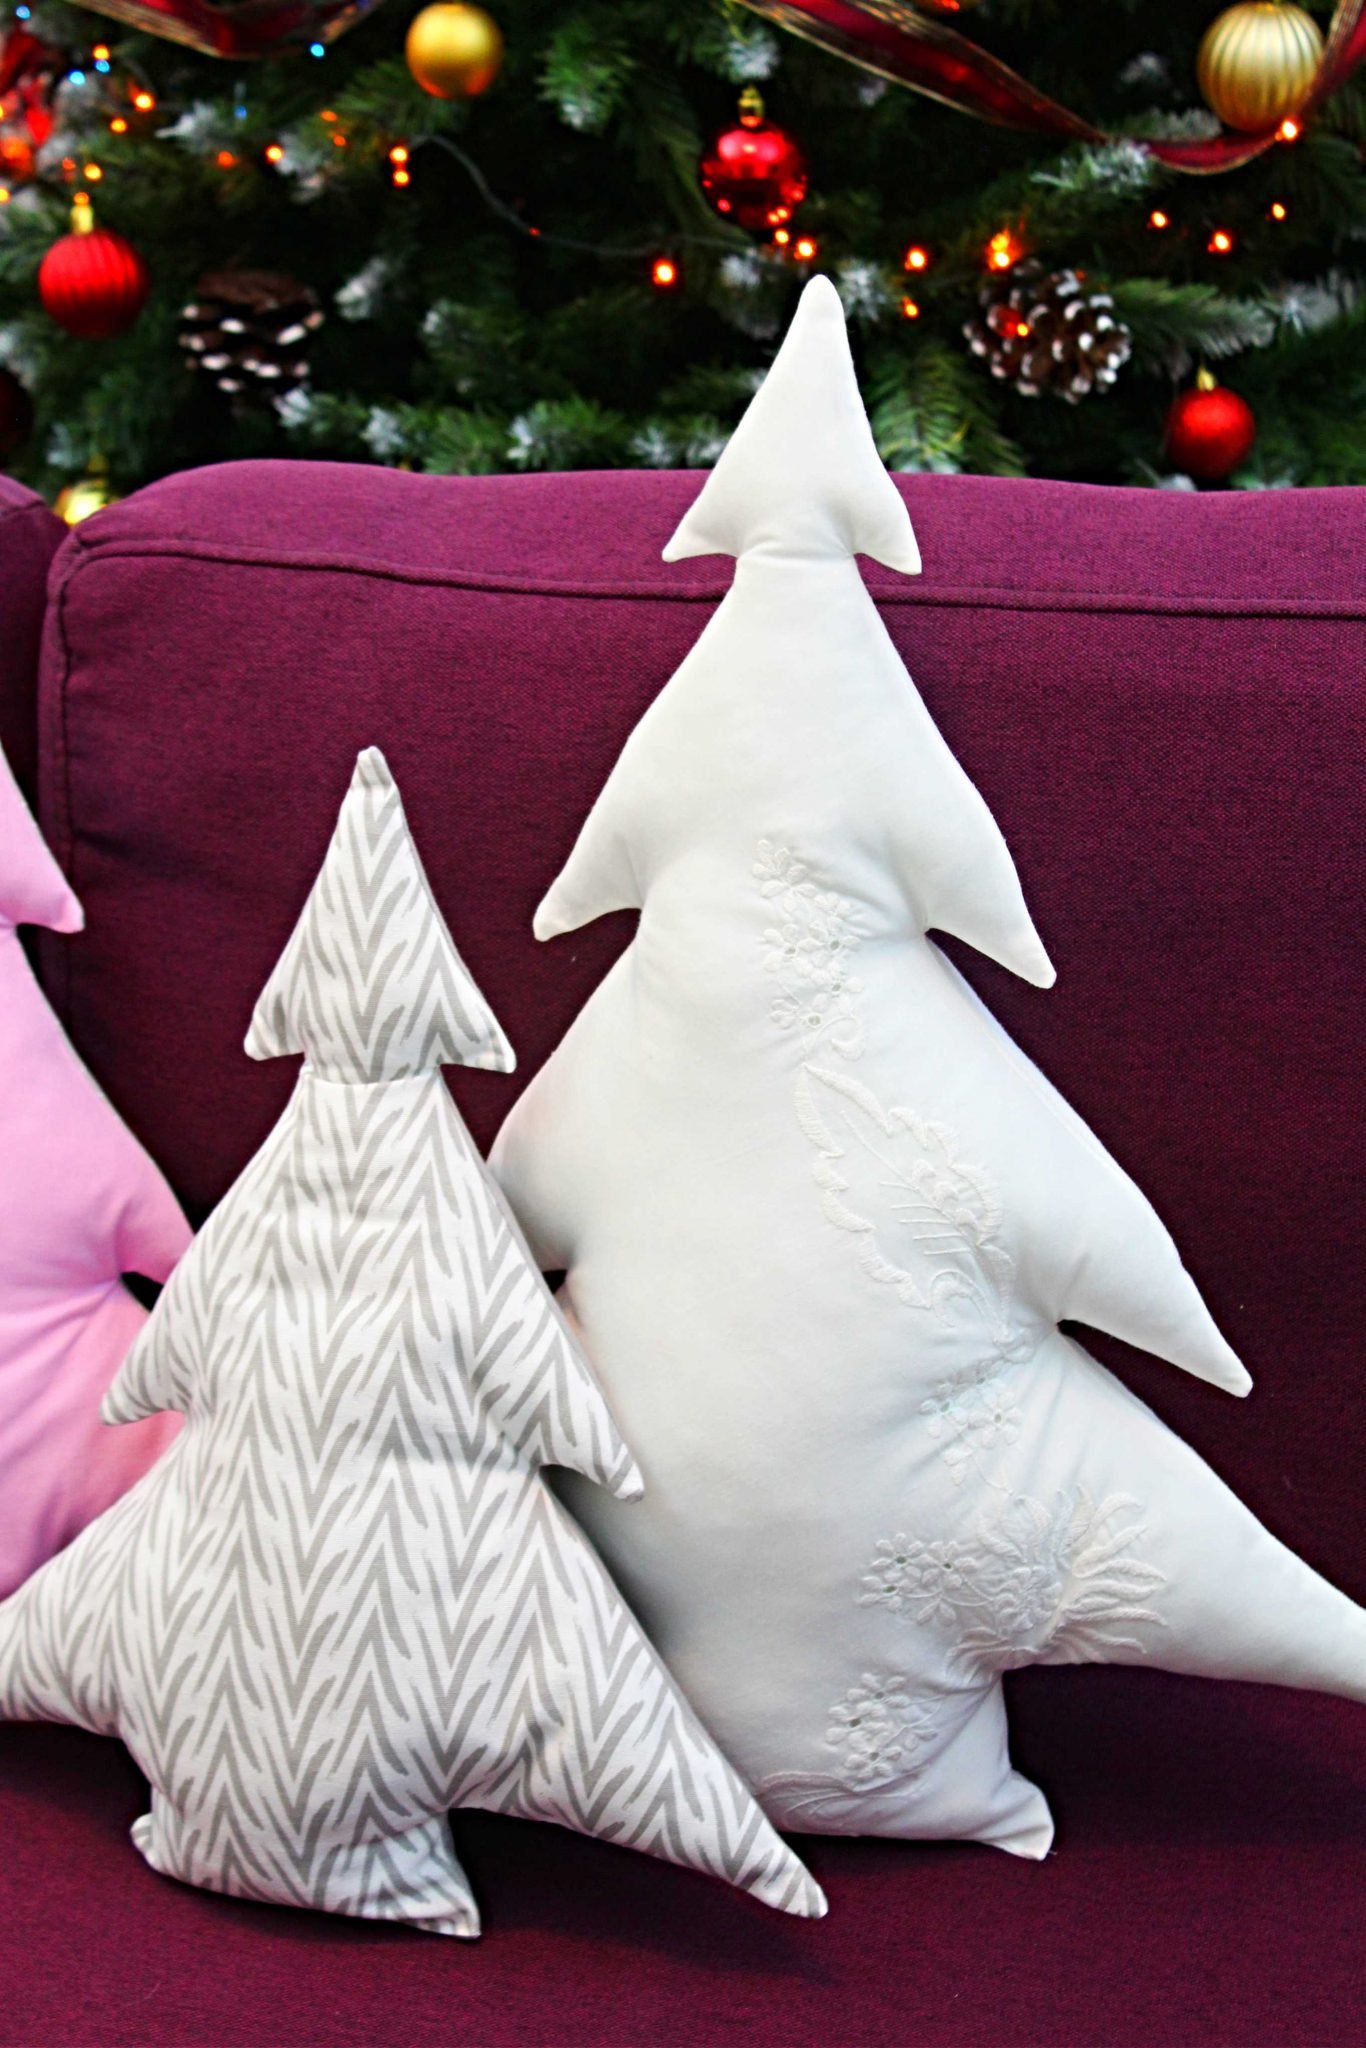 Christmas decorative pillows